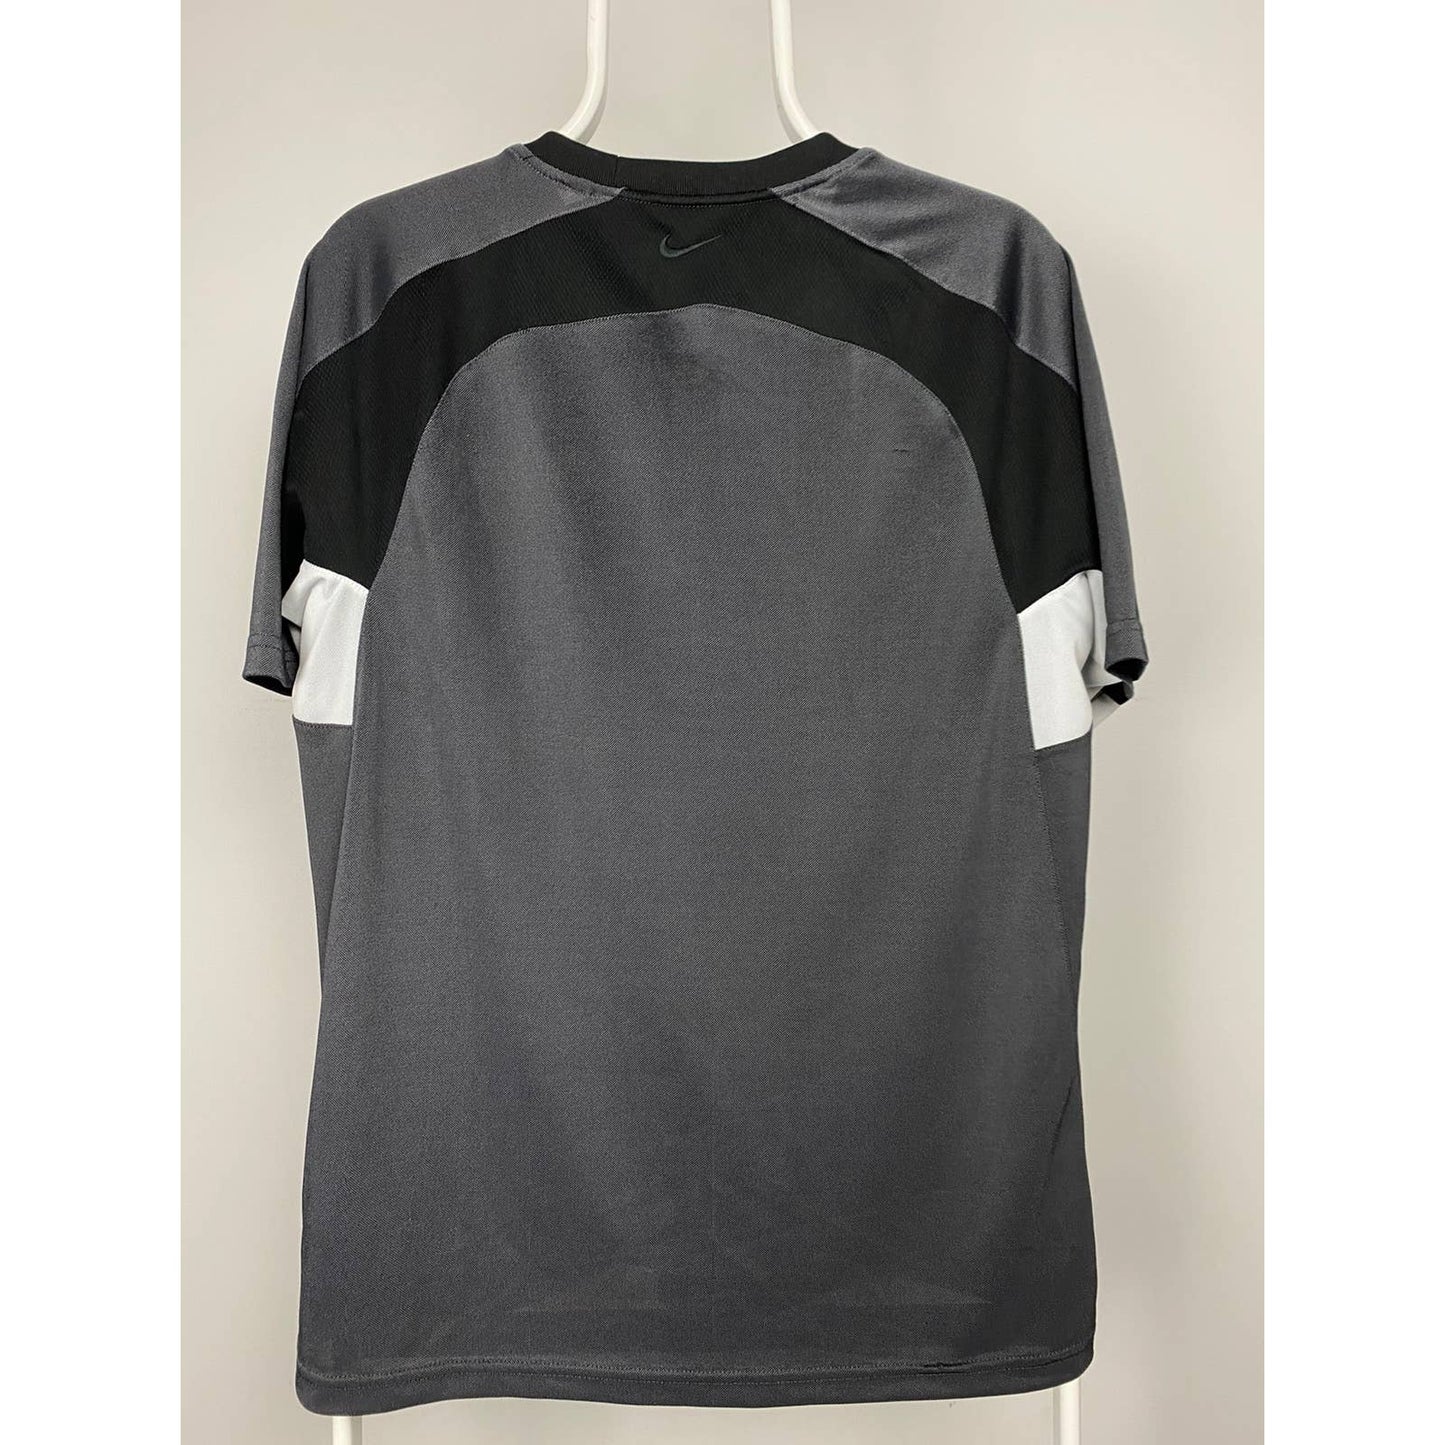 Nike TN vintage grey black T-shirt